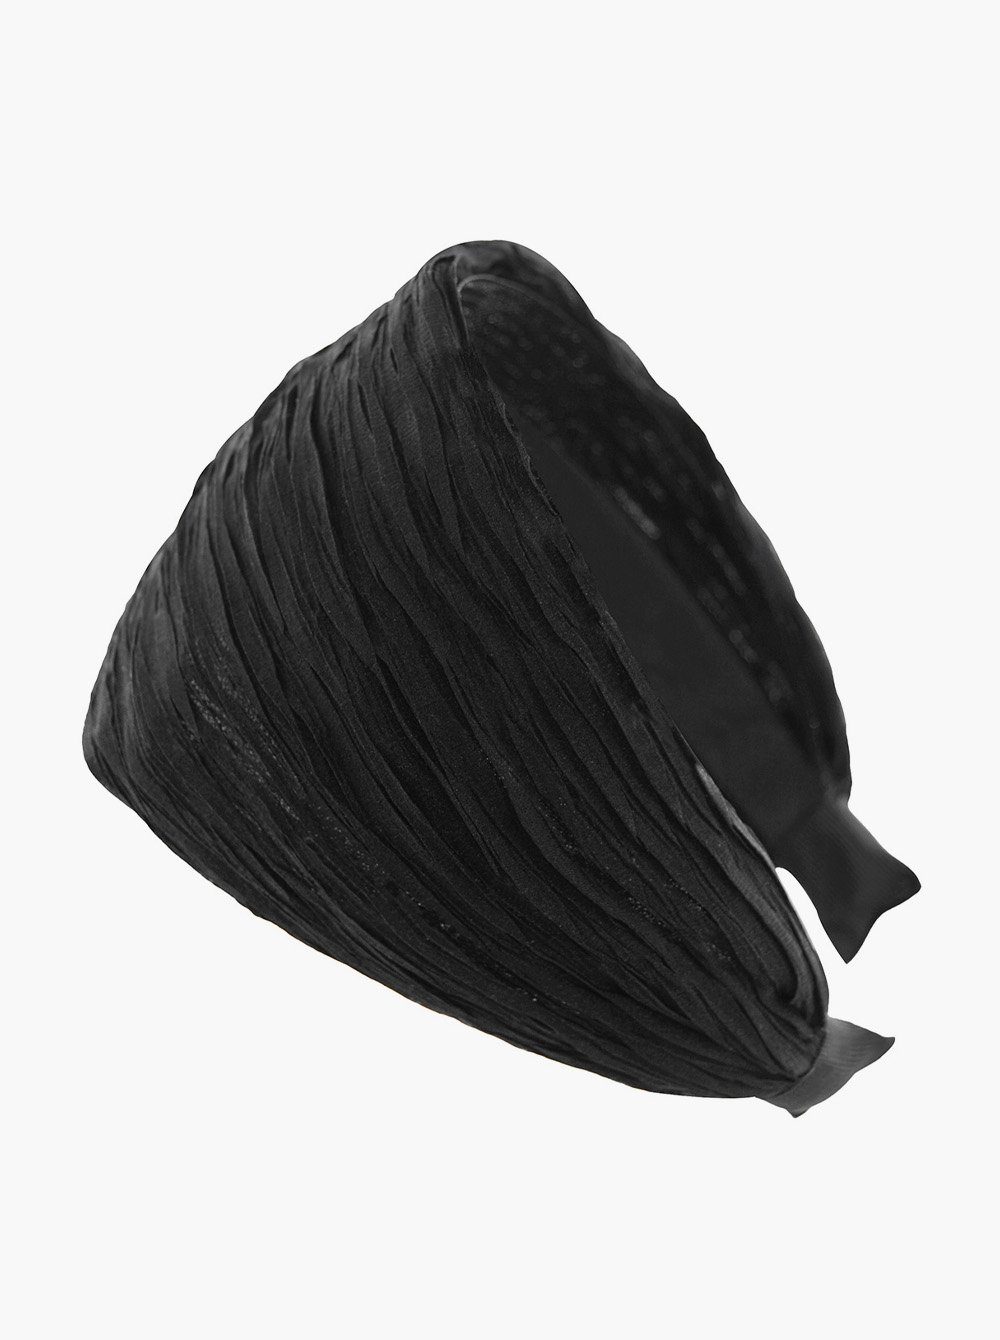 axy Haarreif Breiter Haarreif in Tuchoptik Wunderschön, Damen Breiter Haarreif (Plissierter Stoff) Haarband Haarreifen Schwarz | Haarspangen